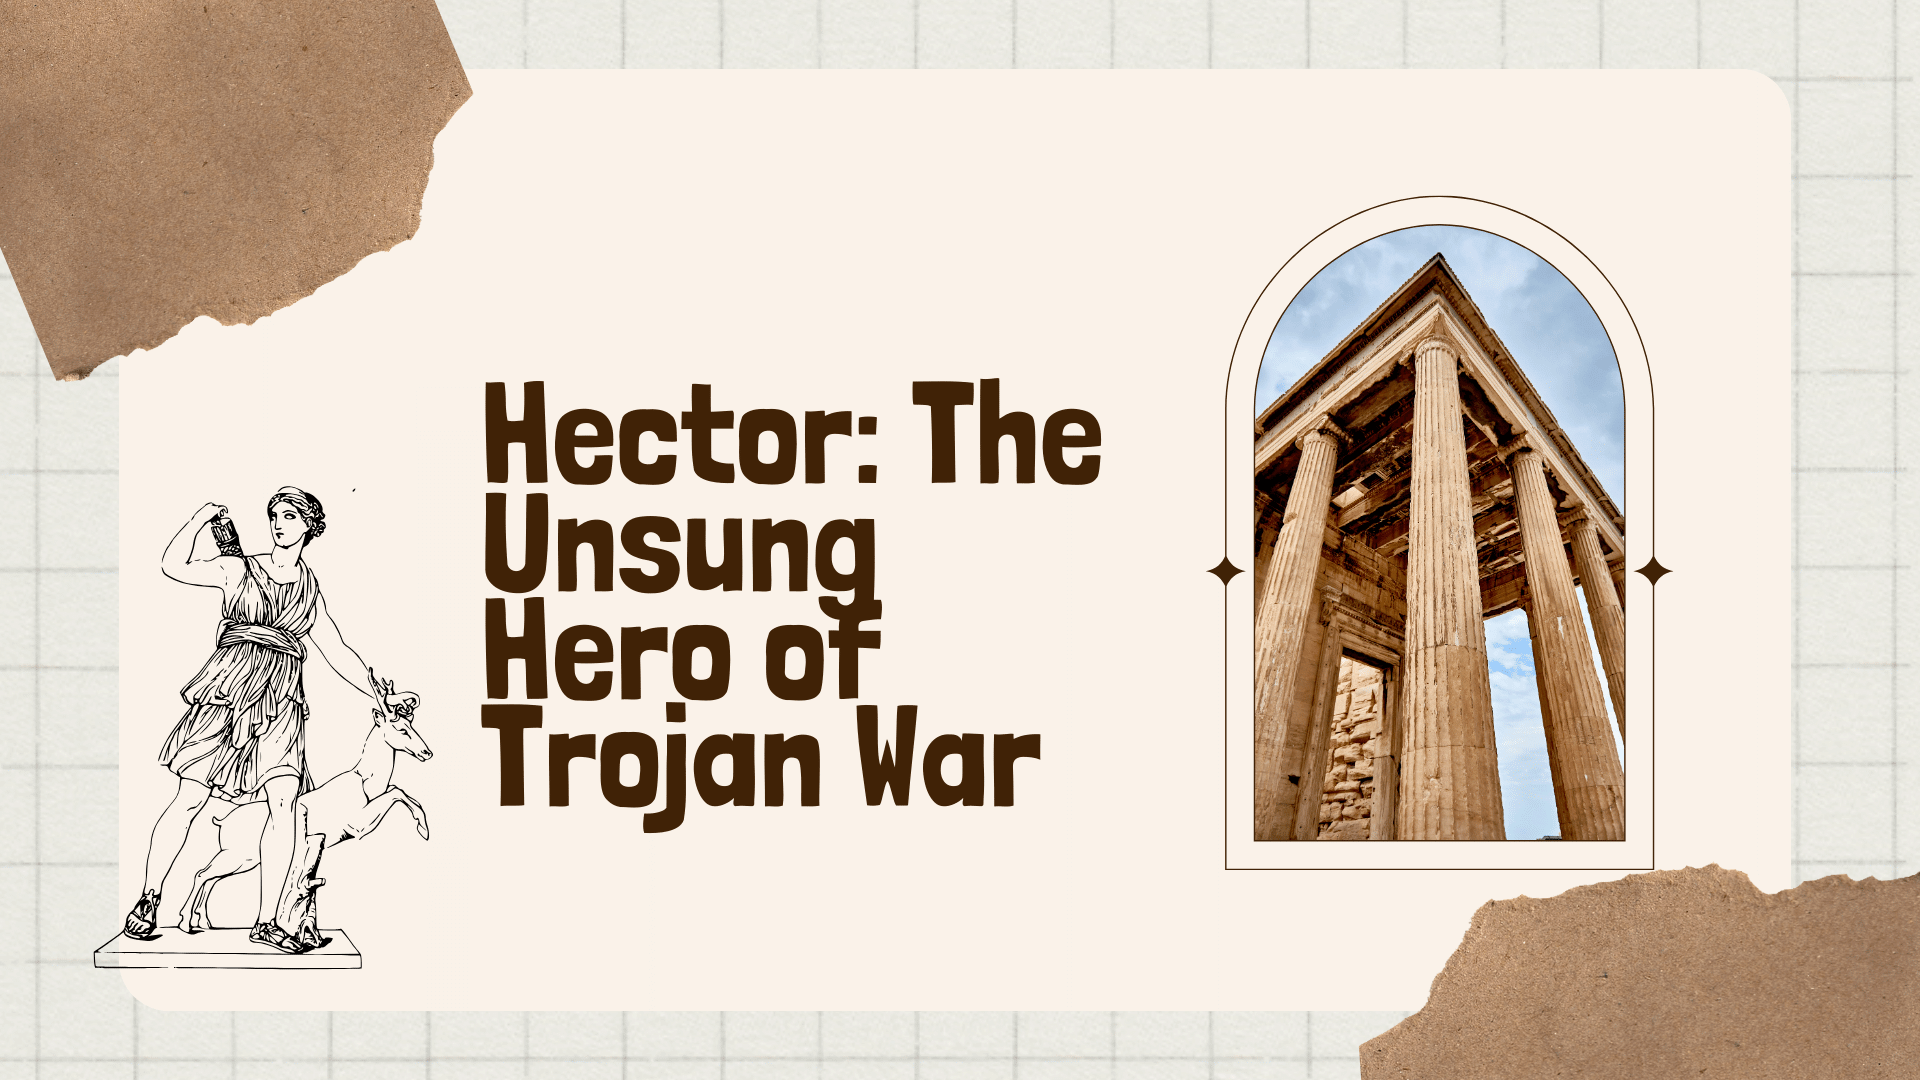 Hector: The Unsung Hero of Trojan War